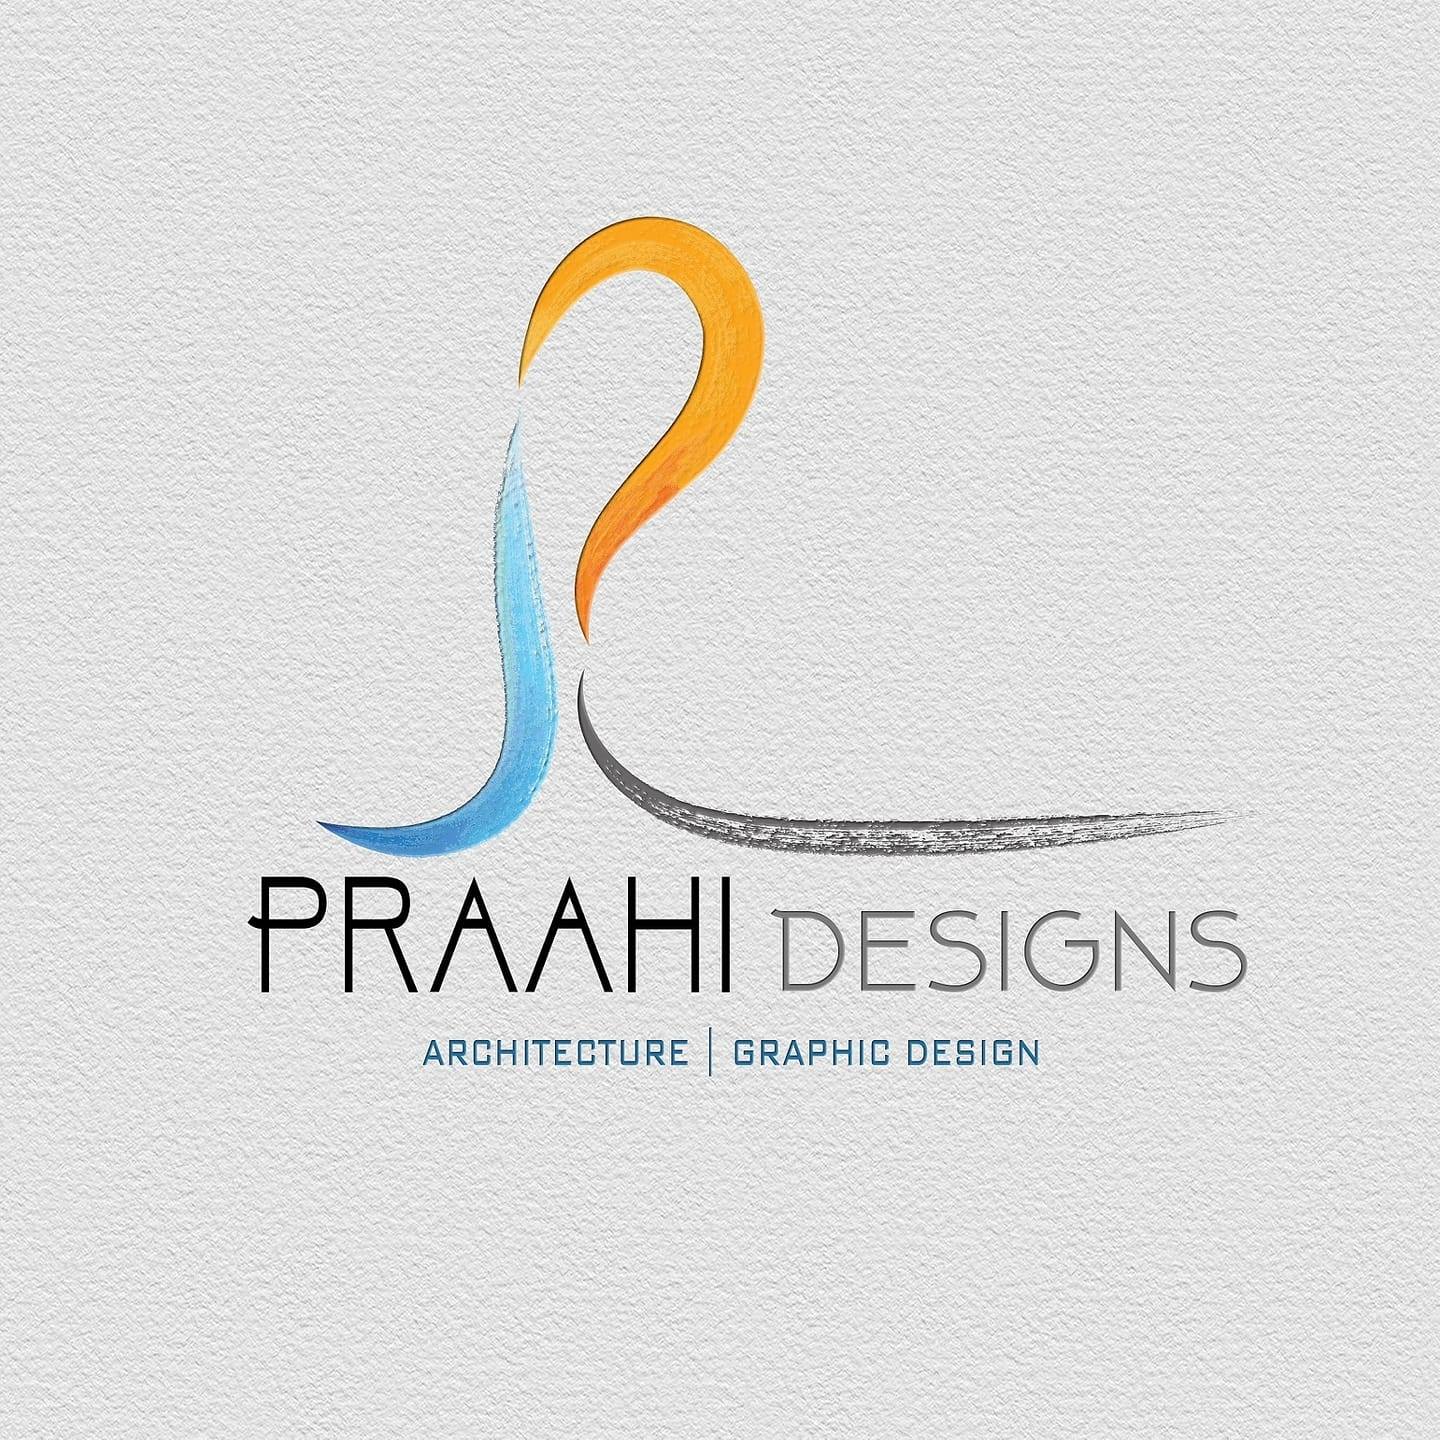 Praahi Designs|Legal Services|Professional Services